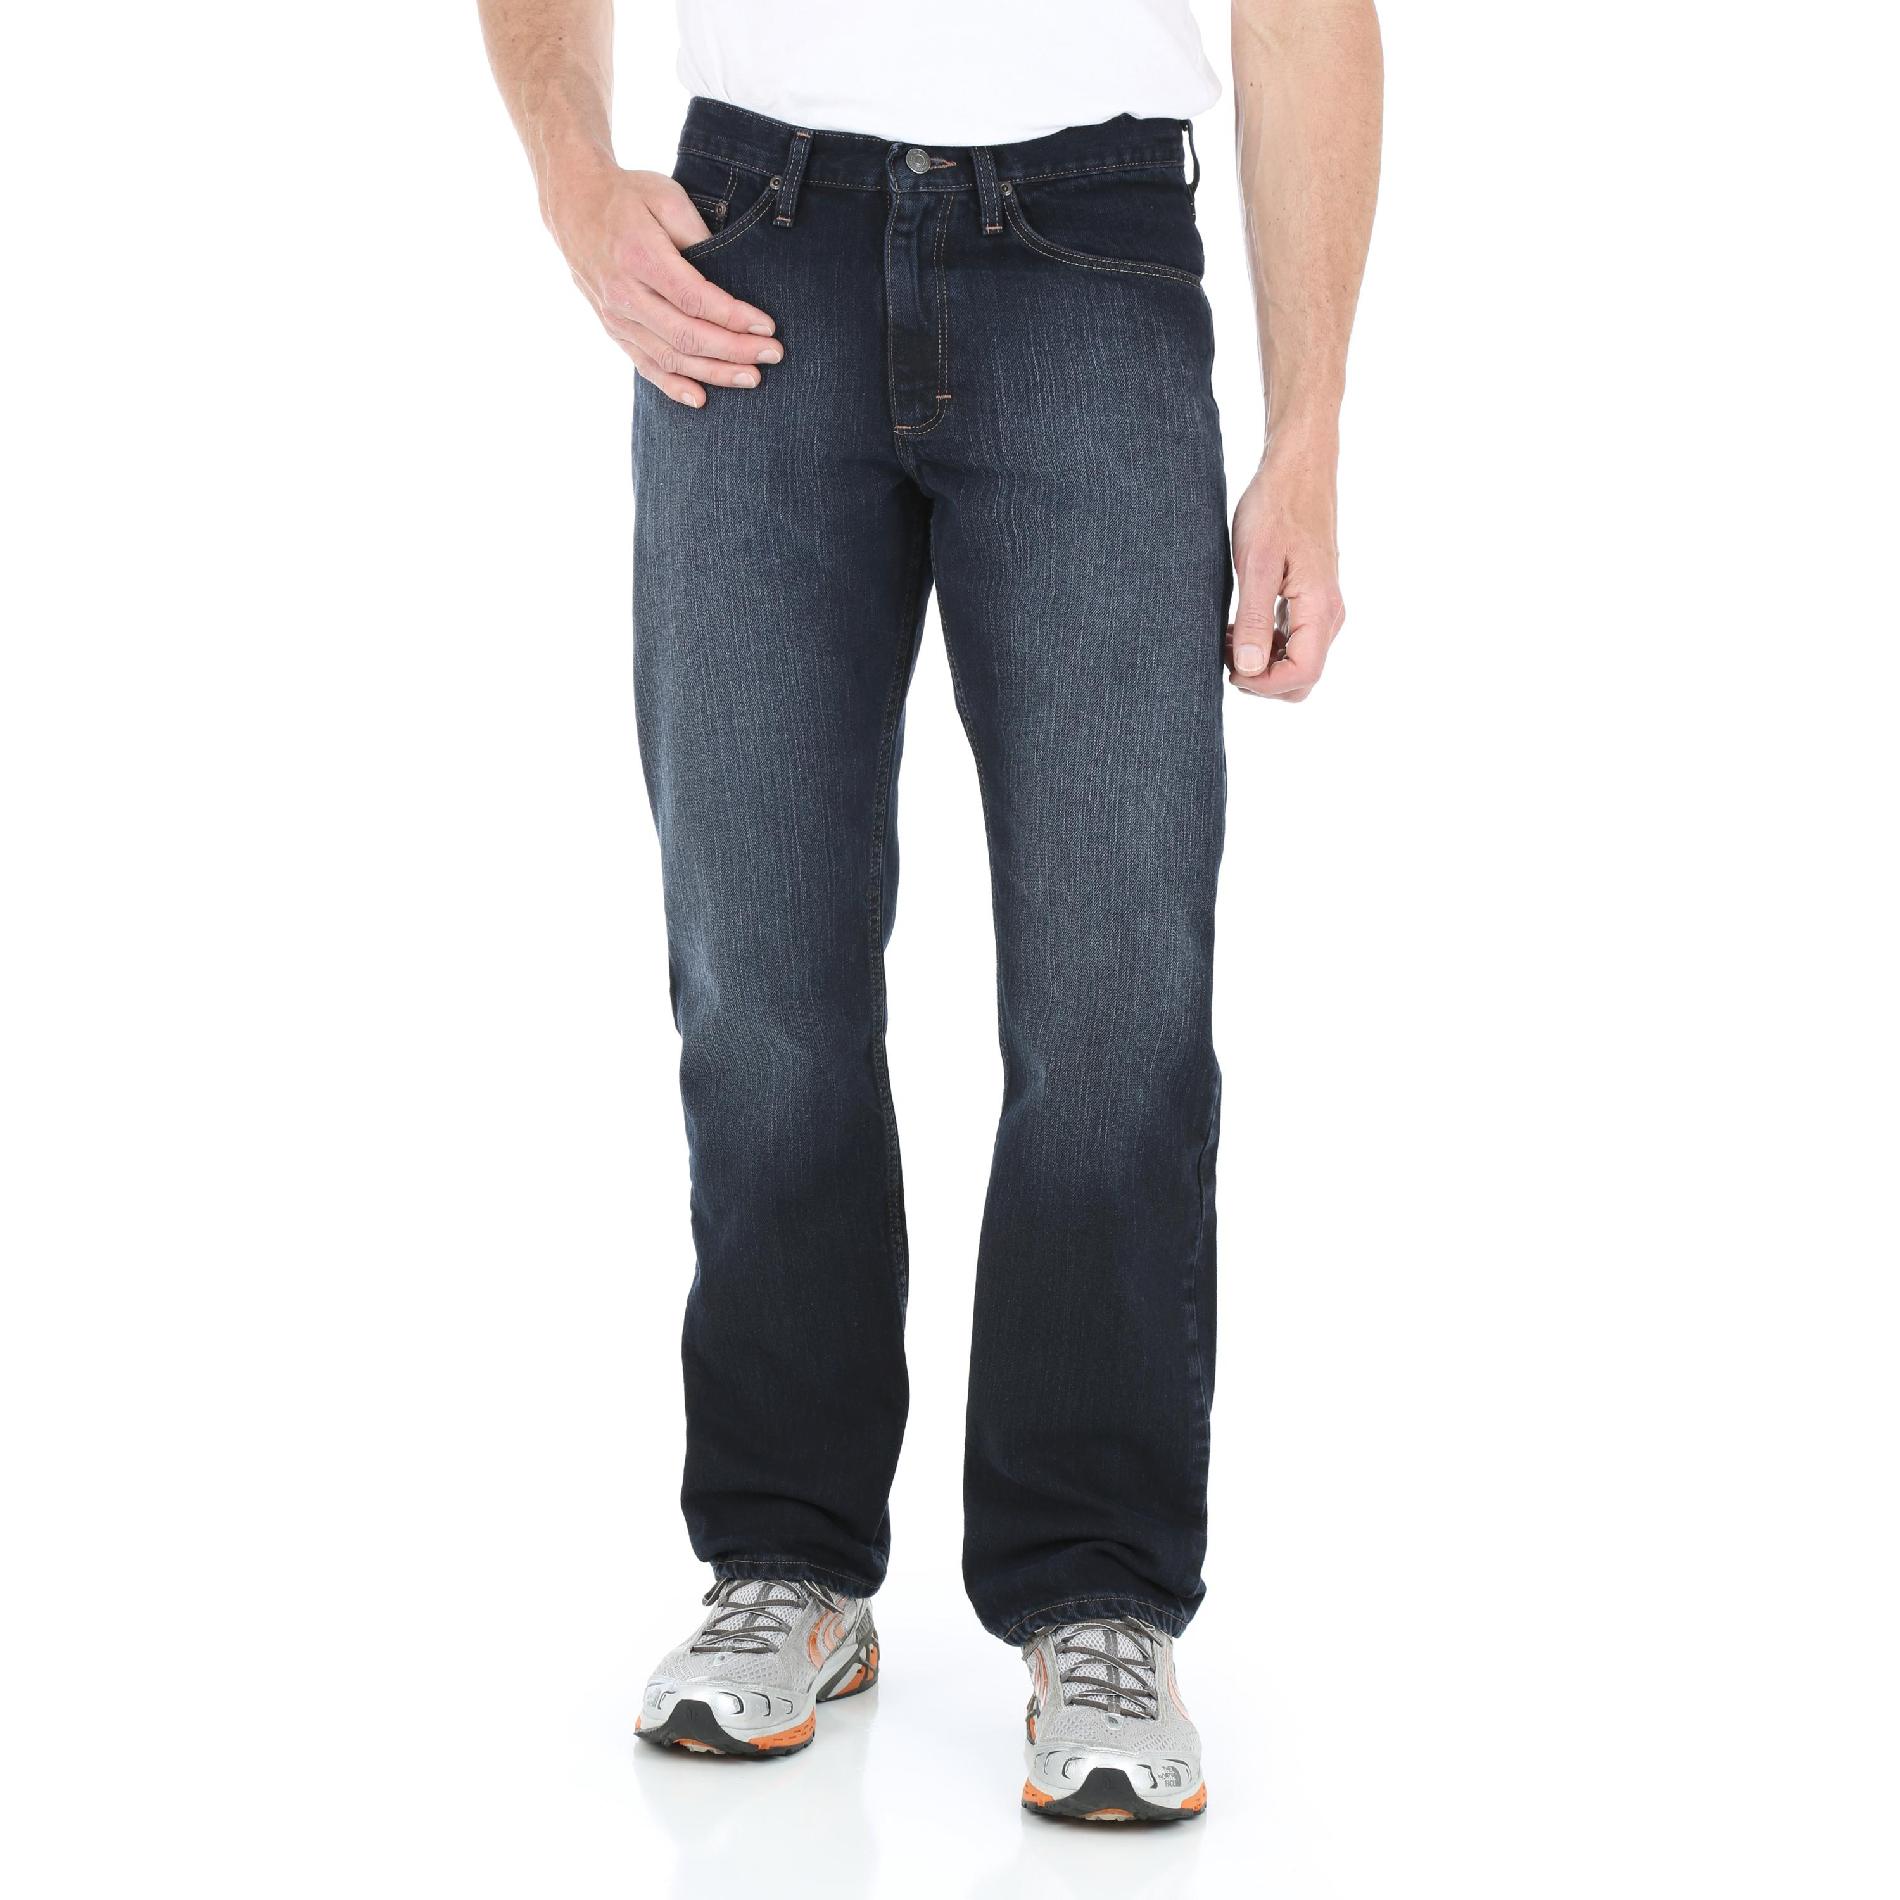 Wrangler Men's Five Star Premium Denim Jeans - Regular Fit